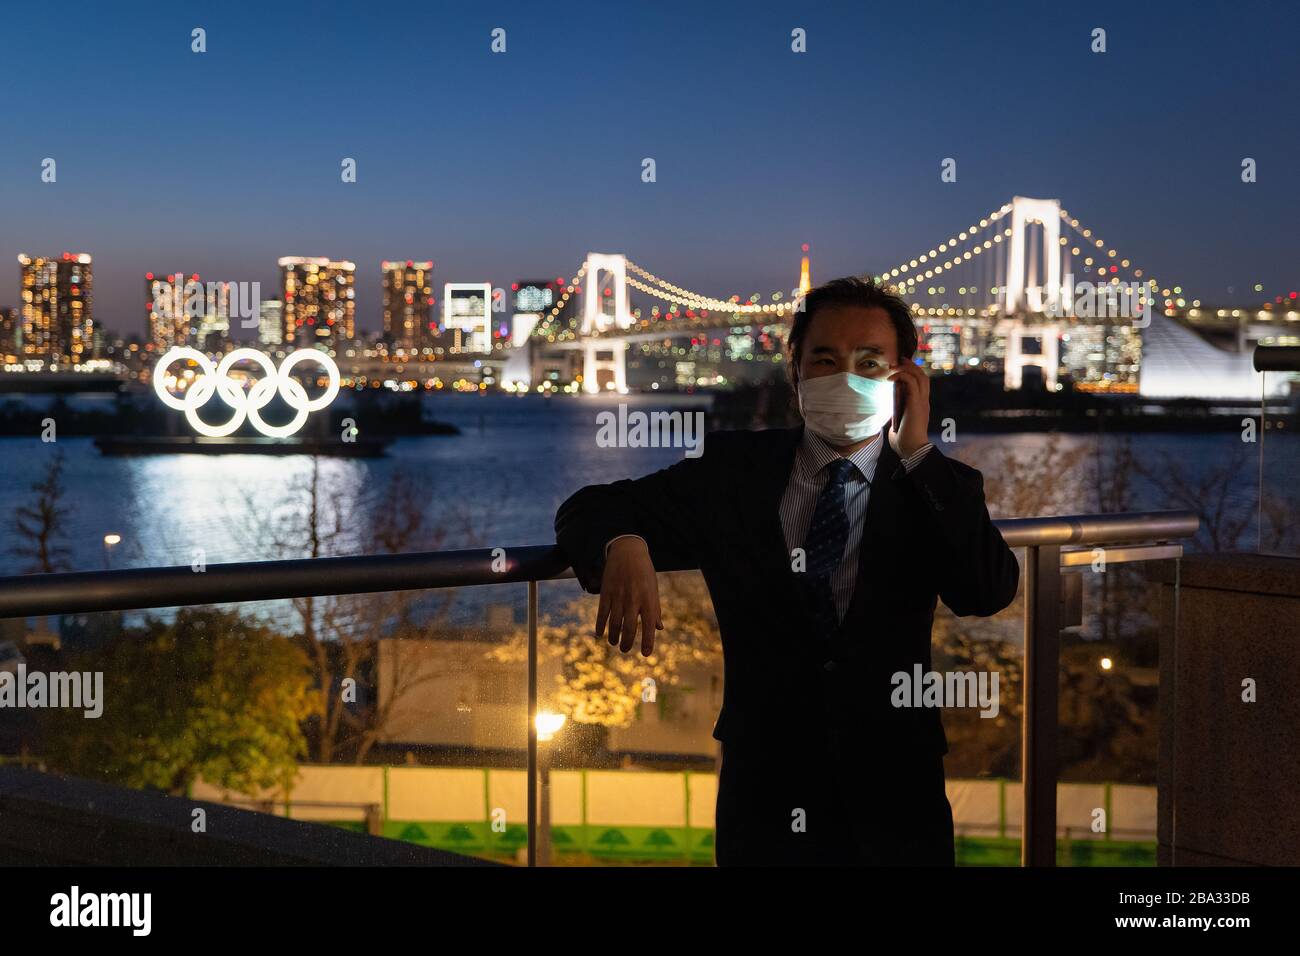 Odaiba, Minato Ward, Tokyo, Japan—MAR 25, 2020: Japanese Businessman with a Mask Phoning near the Olympic Symbol during the Corona Virus Pandemic Stock Photo